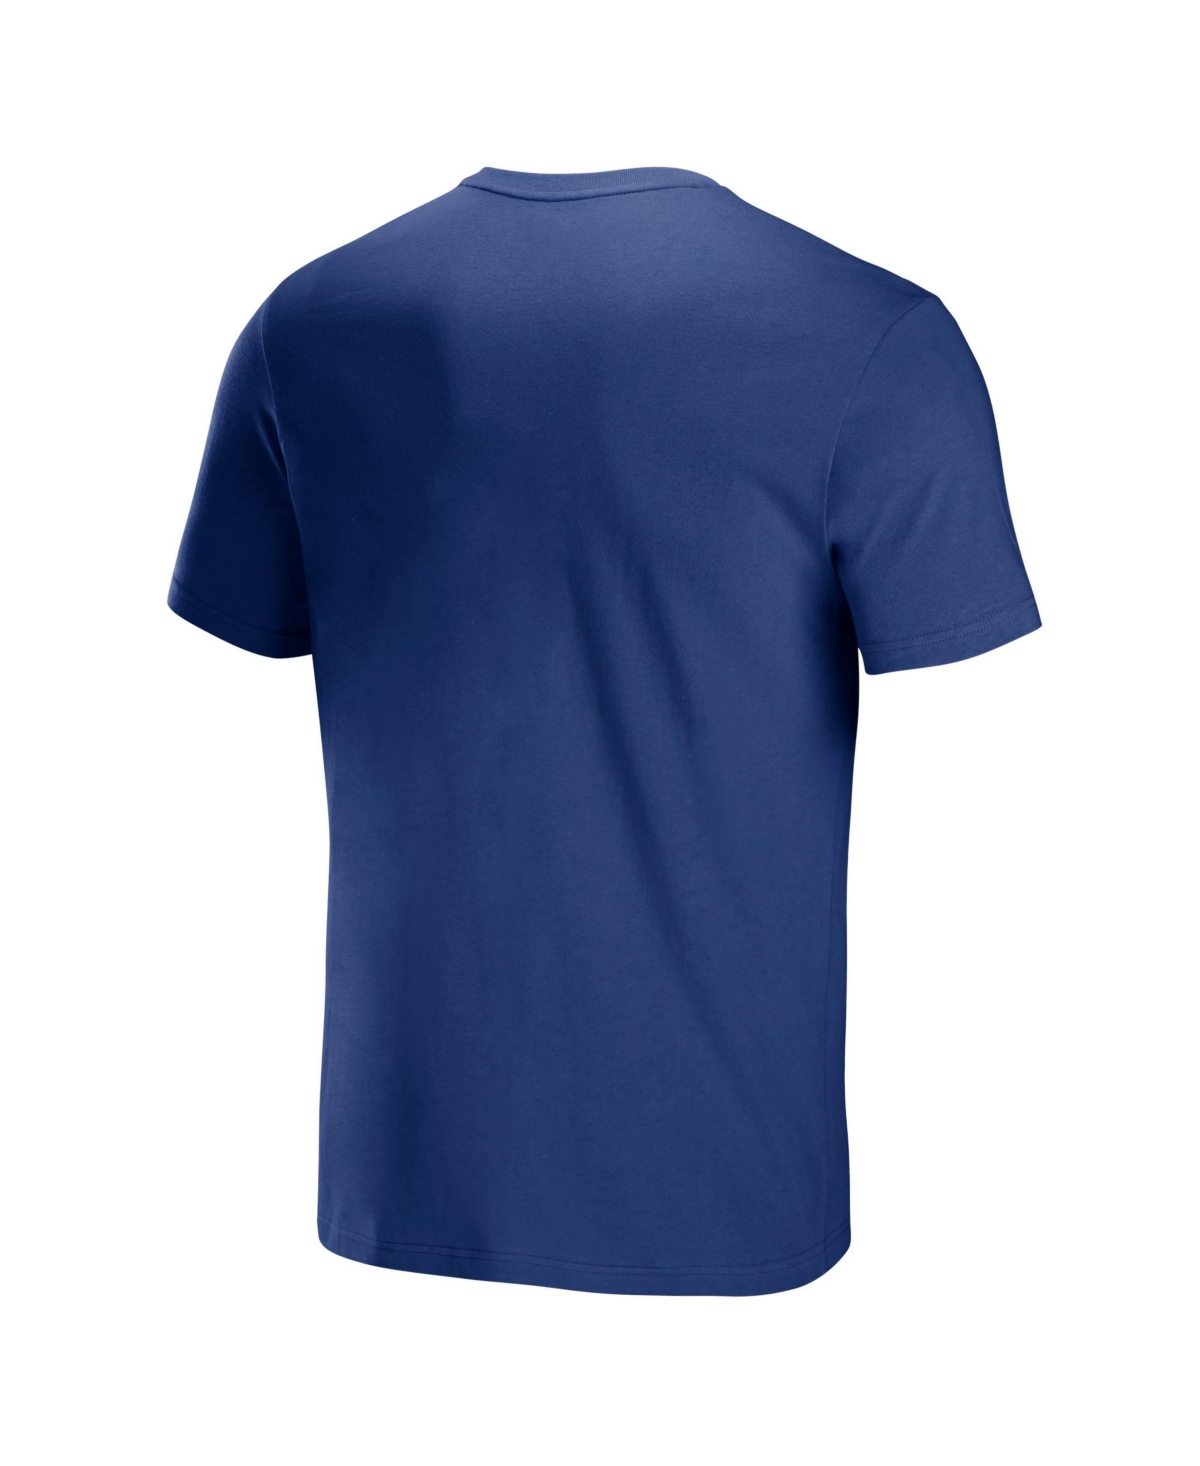 Shop Nfl Properties Men's Nfl X Staple Blue New York Giants Lockup Logo Short Sleeve T-shirt